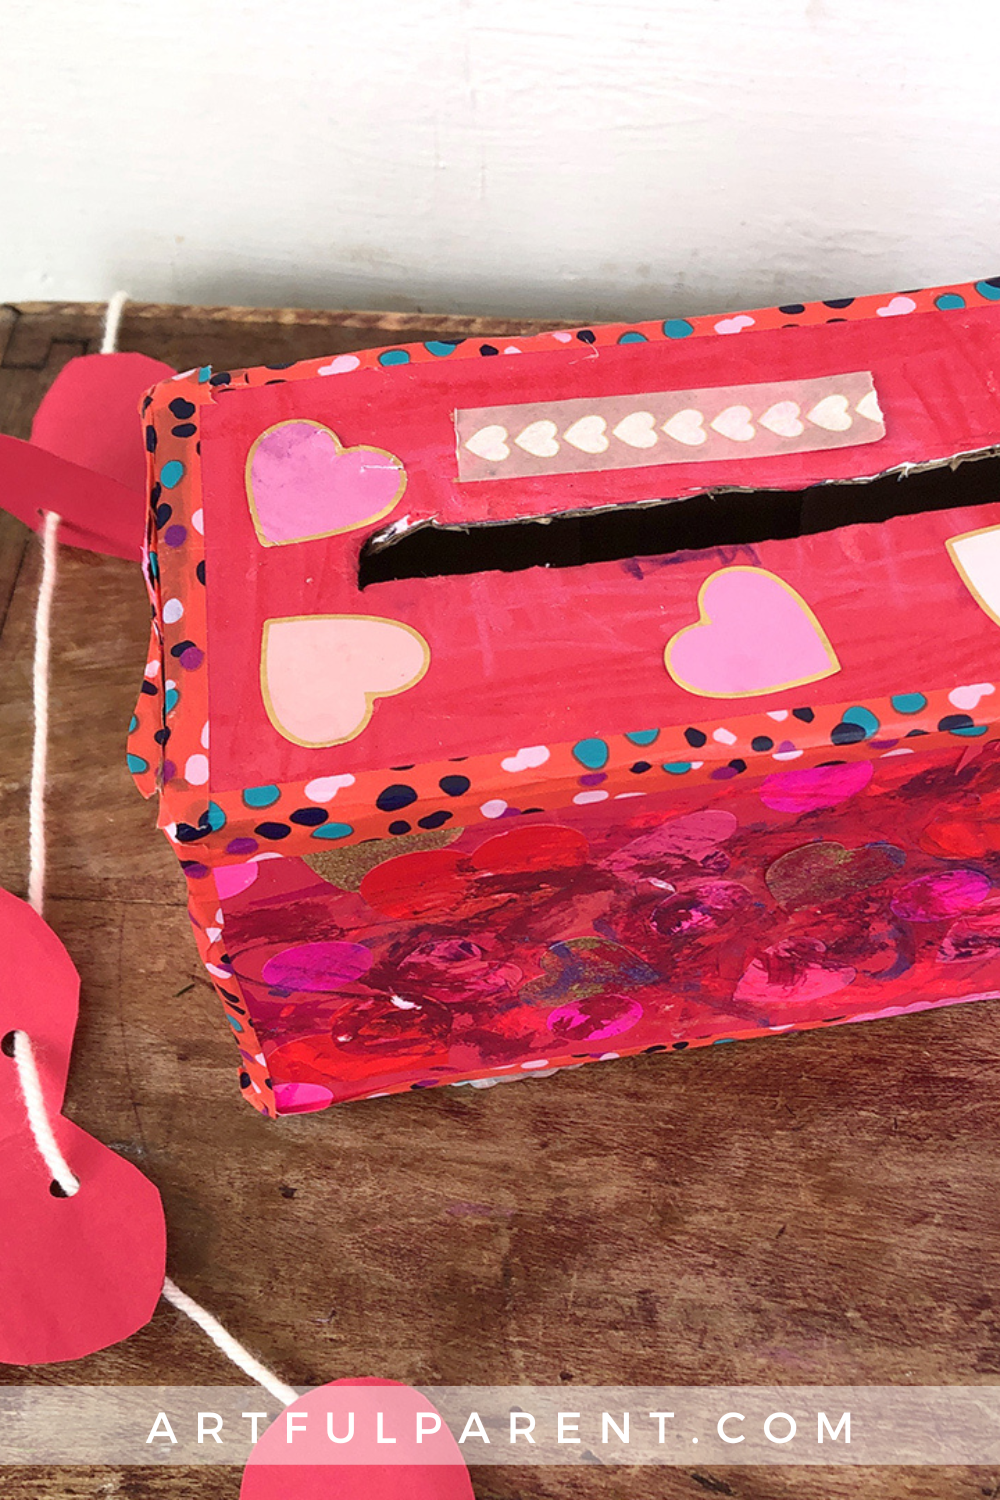 How to Make a DIY Valentine\'s Box